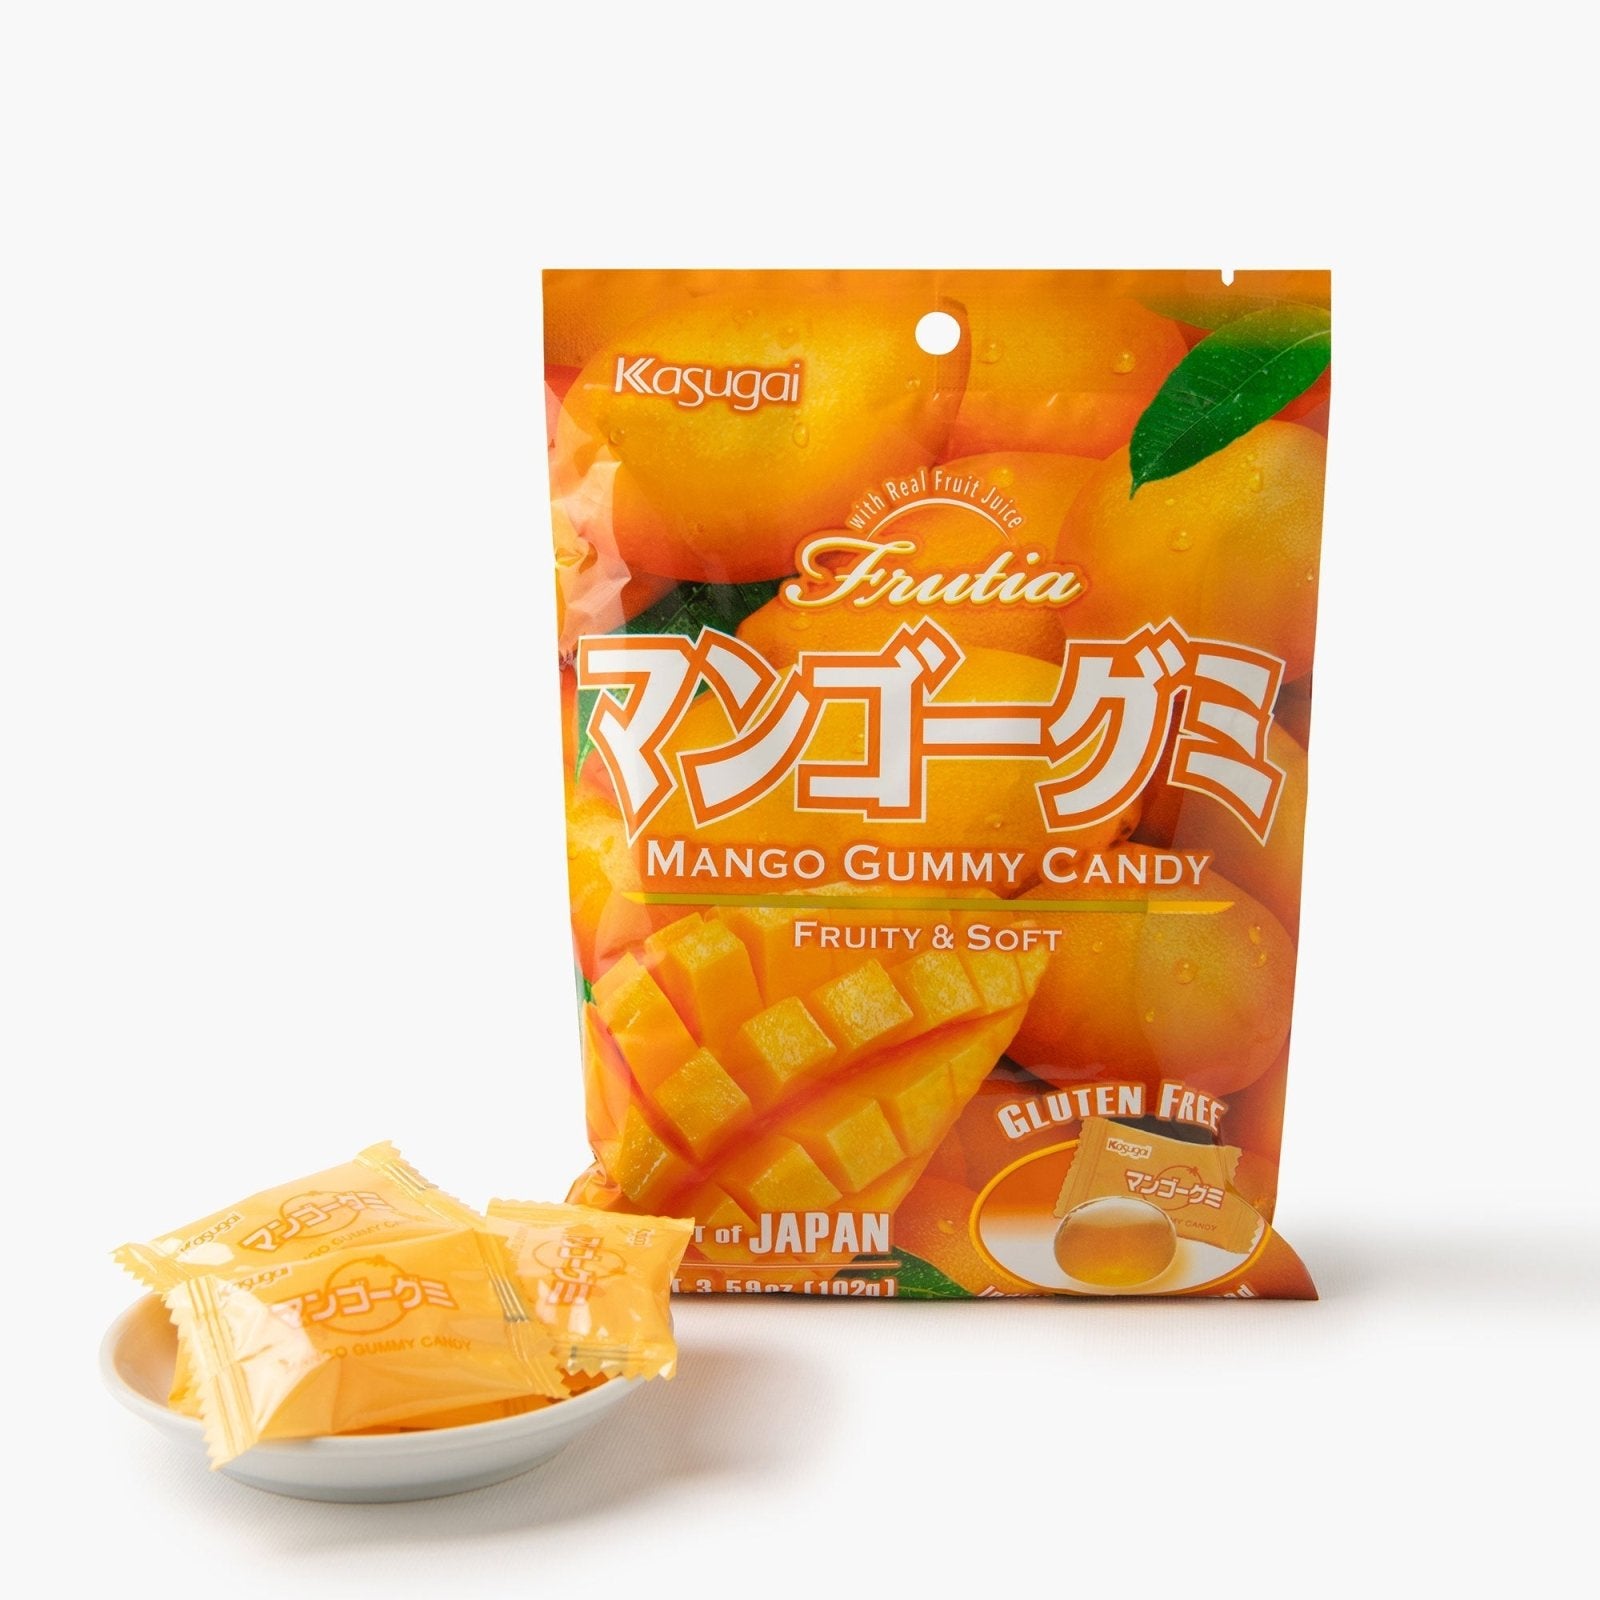 Kasugai frutia gummy mango - 108g - Kasuagai -iRASSHAi